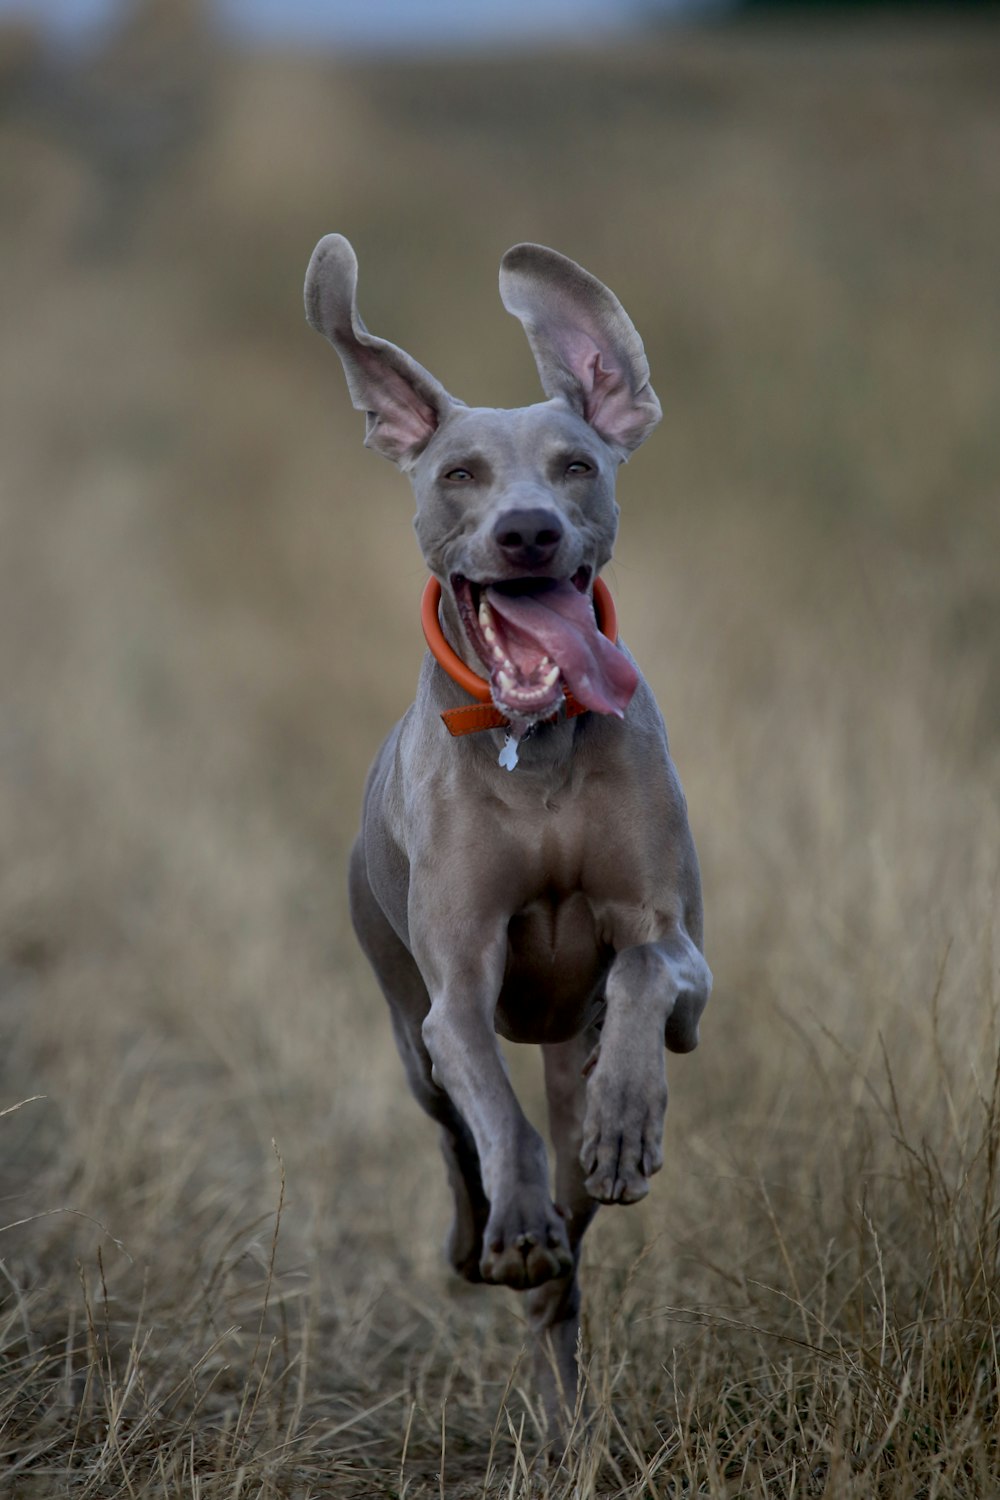 short-coated gray dog running on green grass field